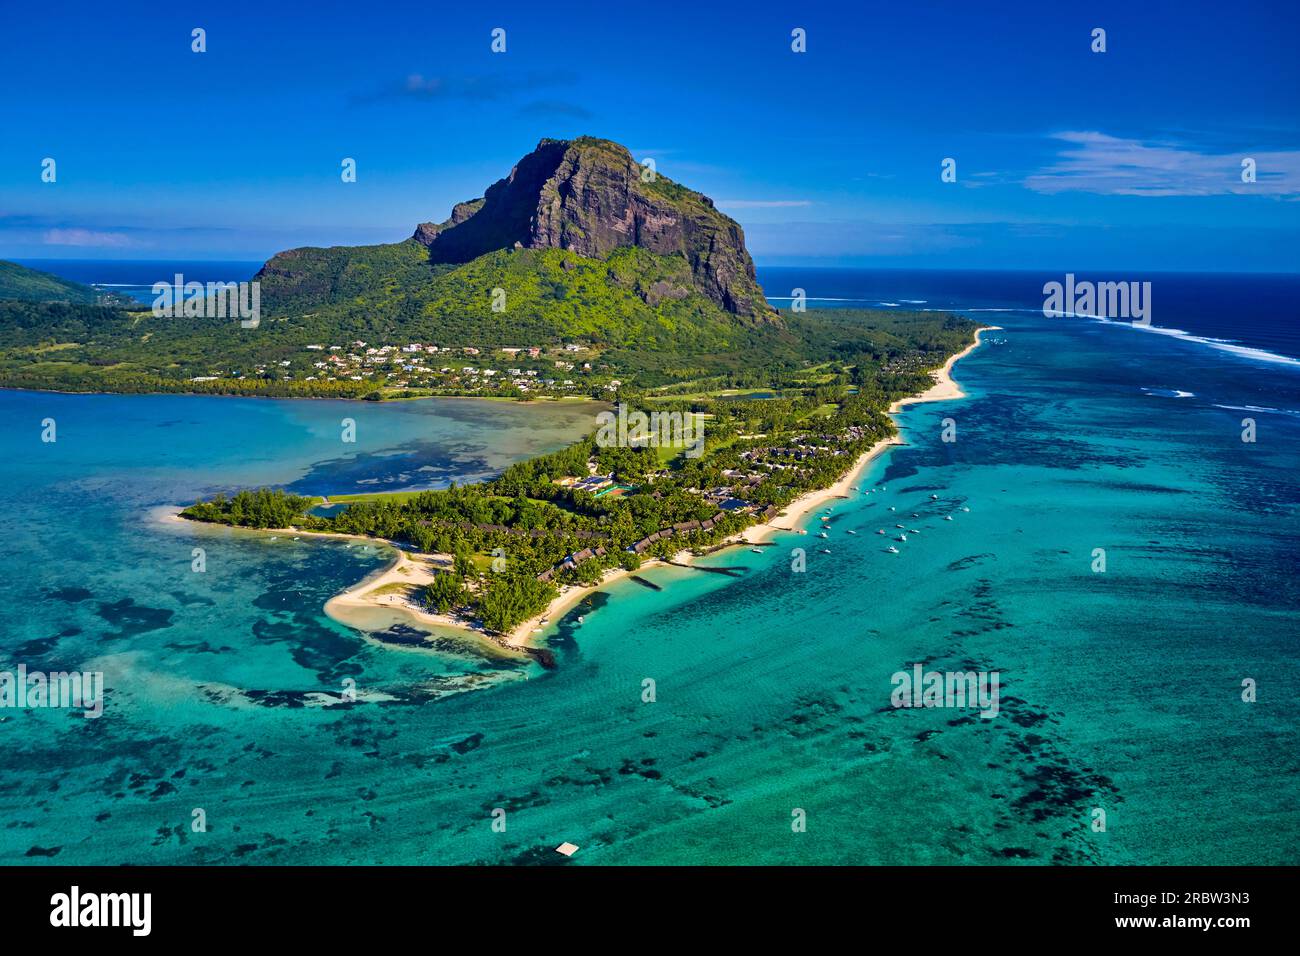 Mauritius, Black River district, Morne Brabant peninsula, Unesco World Heritage, aerial view Stock Photo